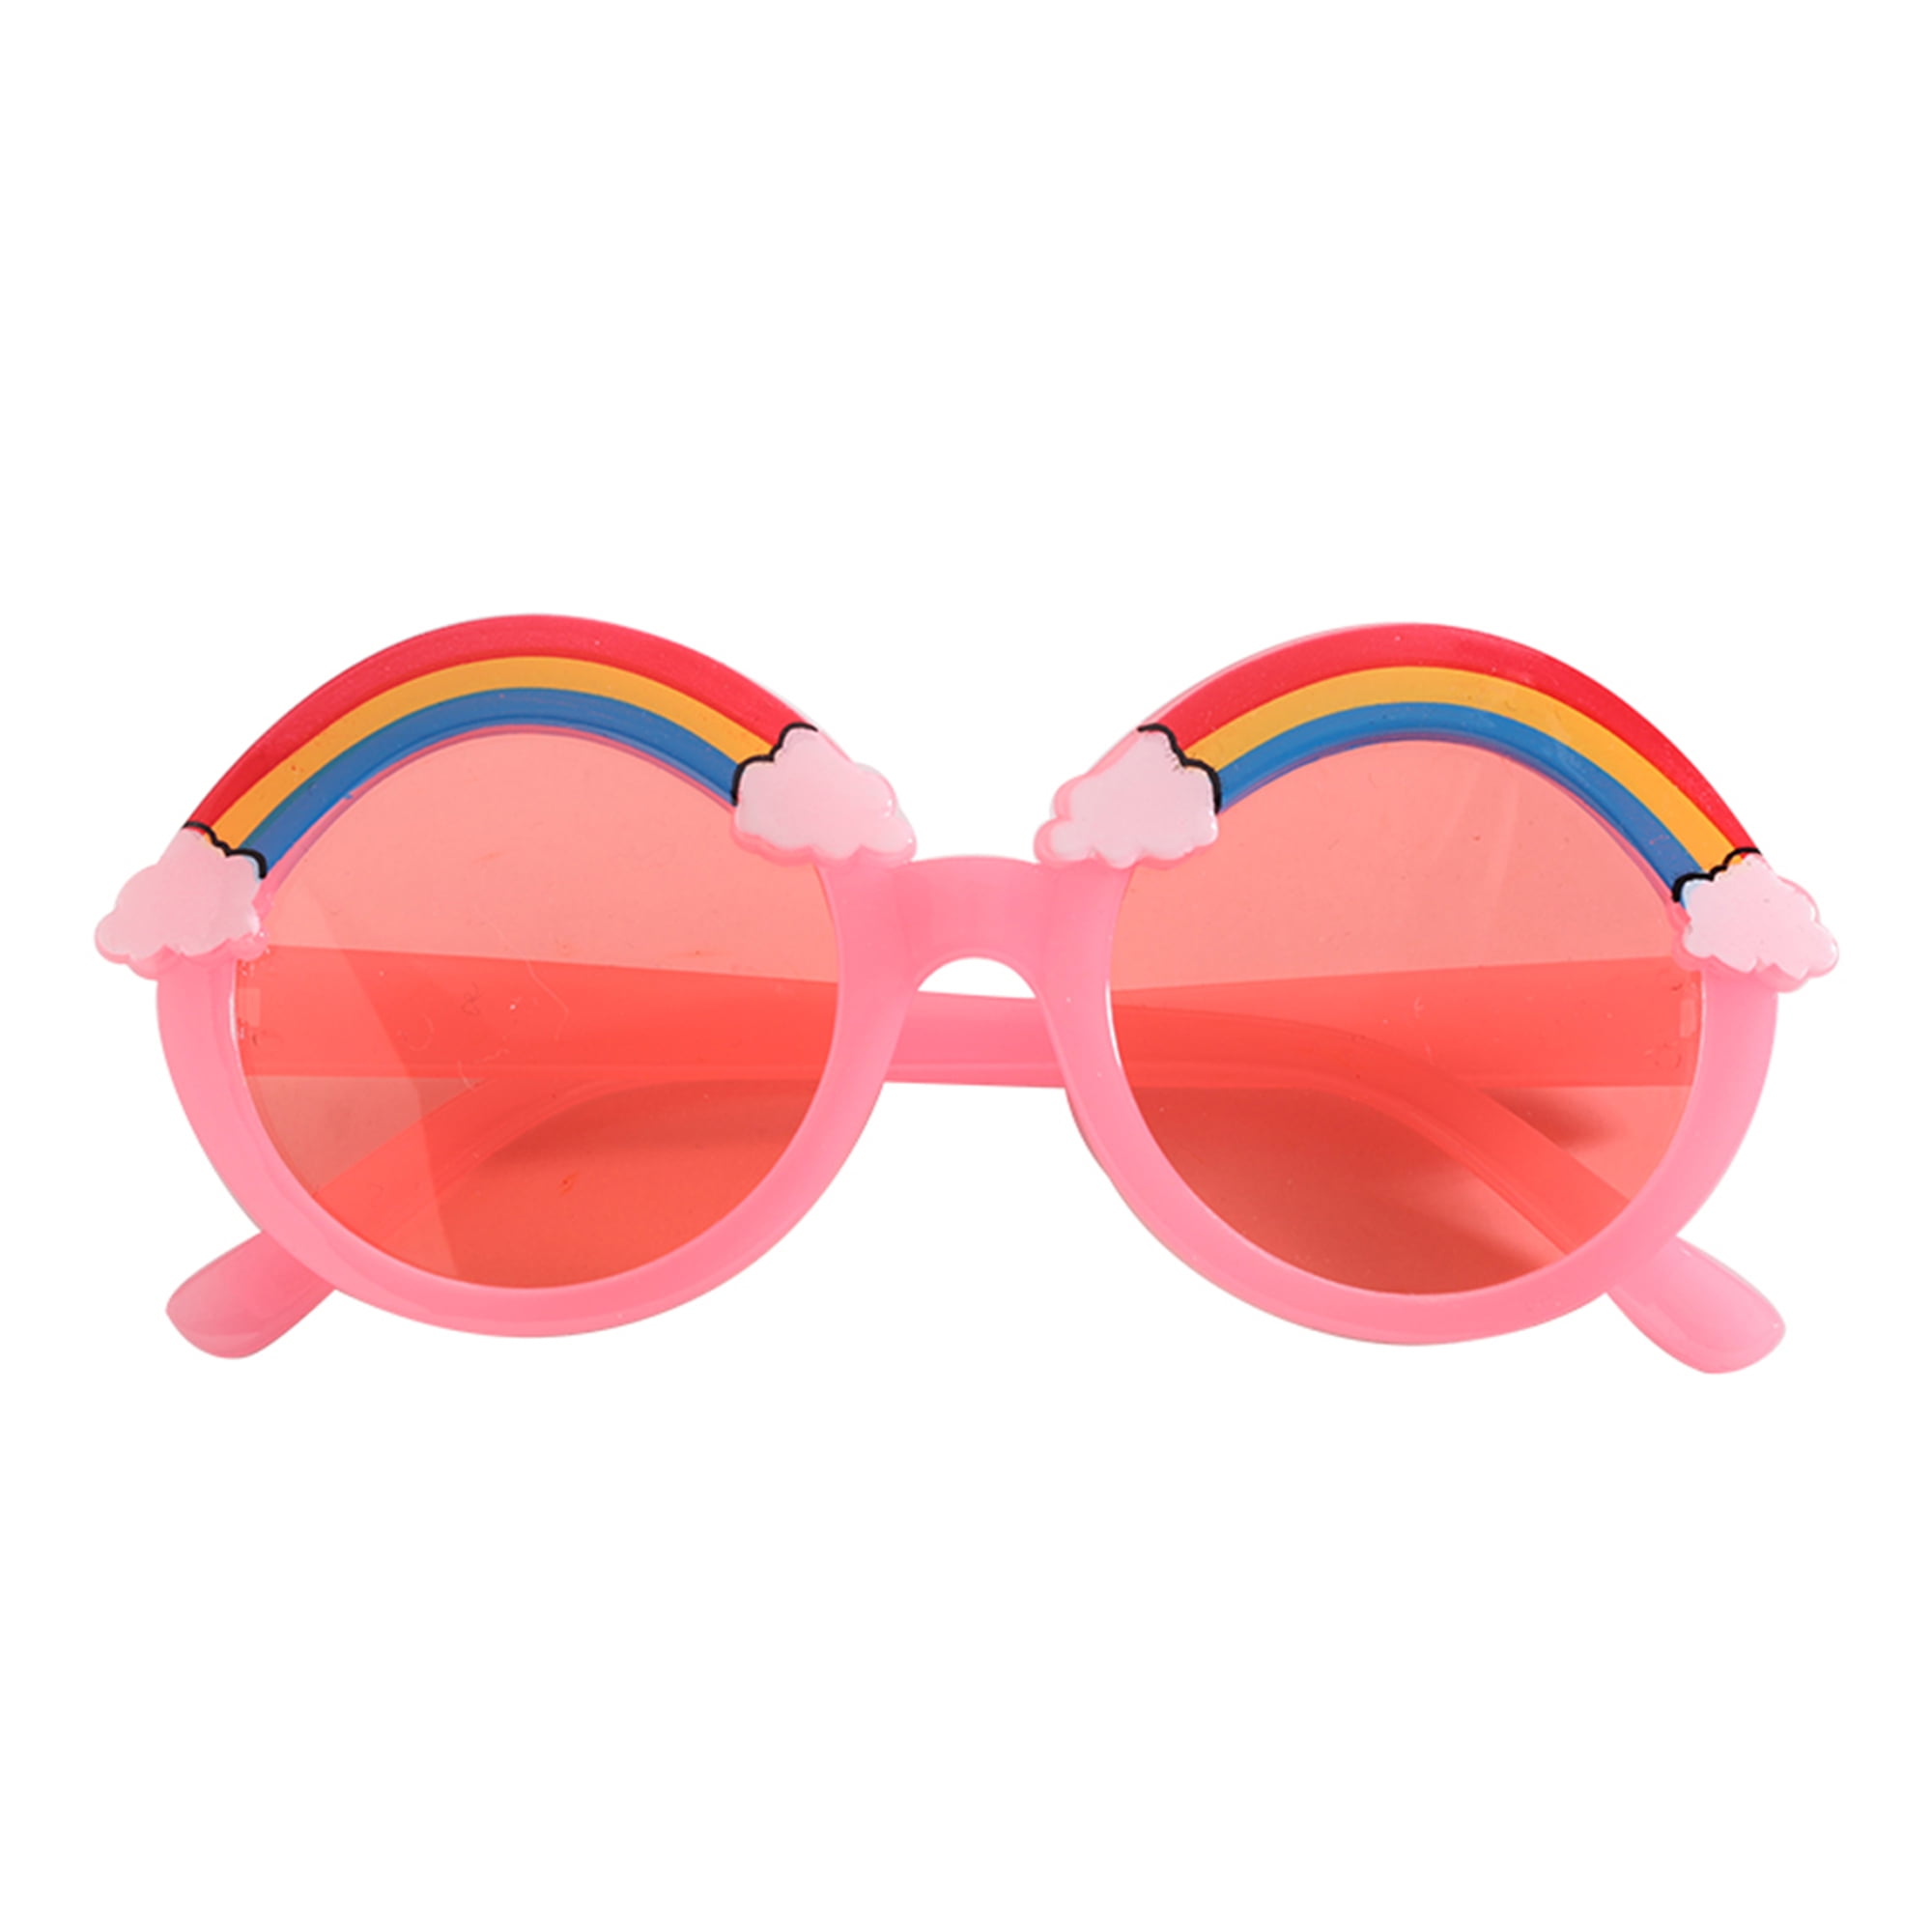 Kids Sunglasses for Boys Girls Cute Round Baby Sunglasses UV400 Protection